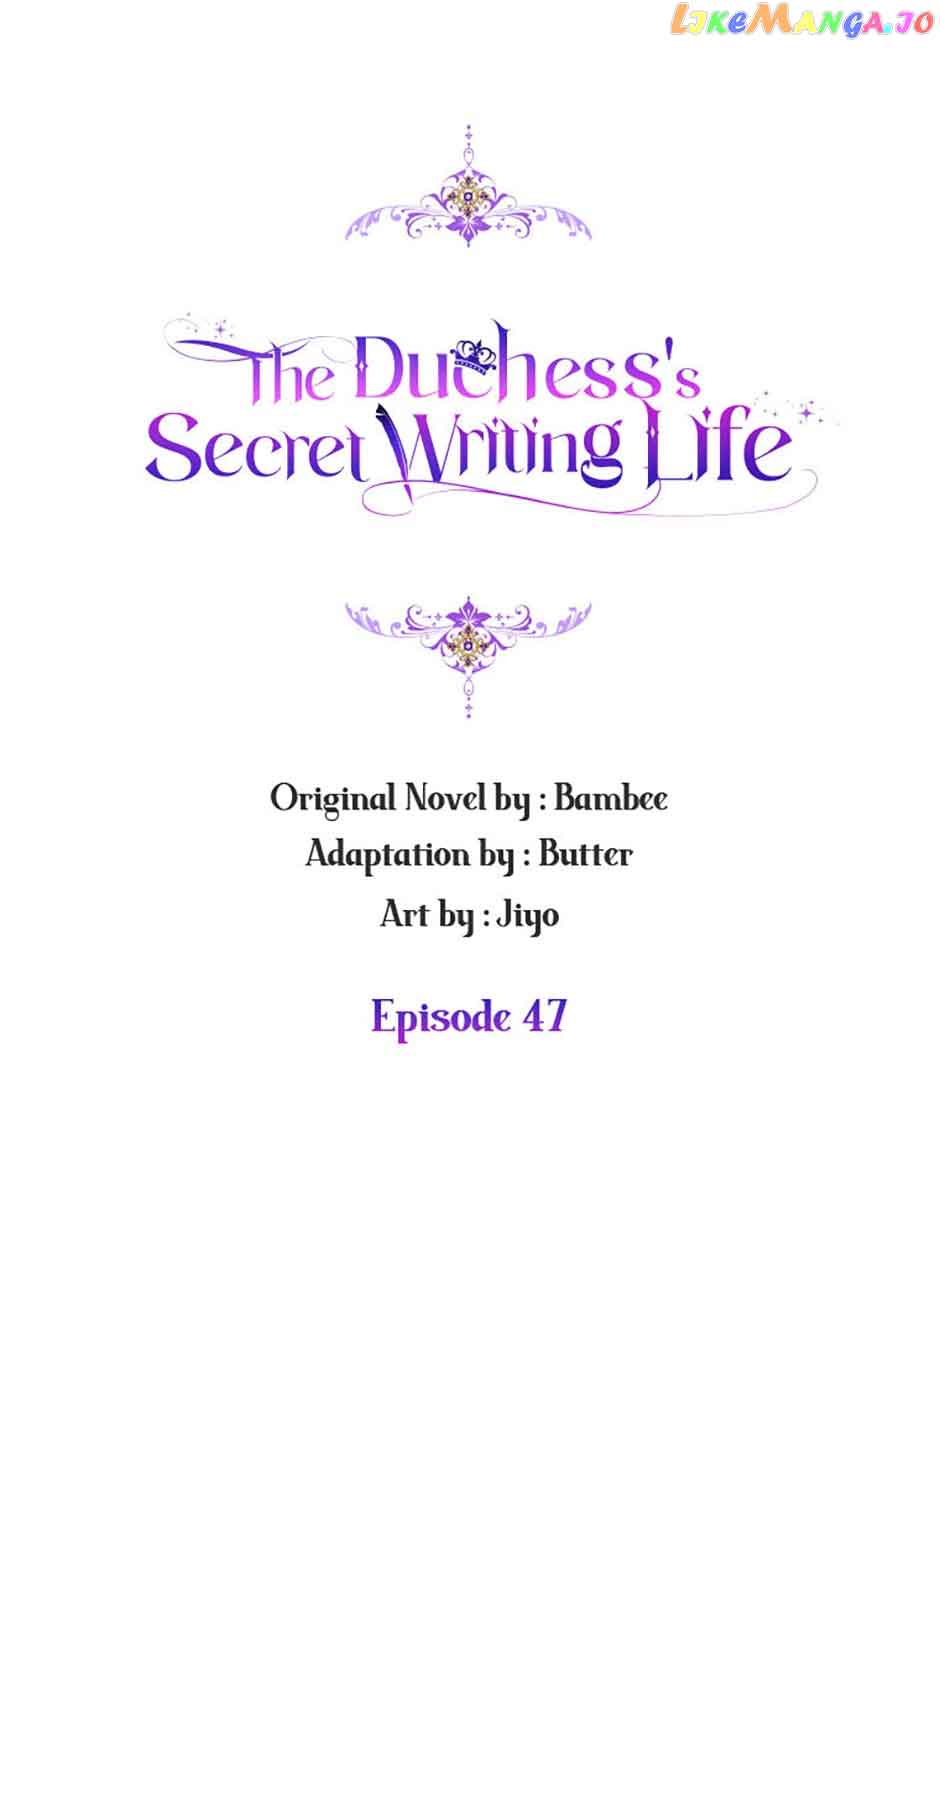 The Duchess’ Secret Writings chapter 47